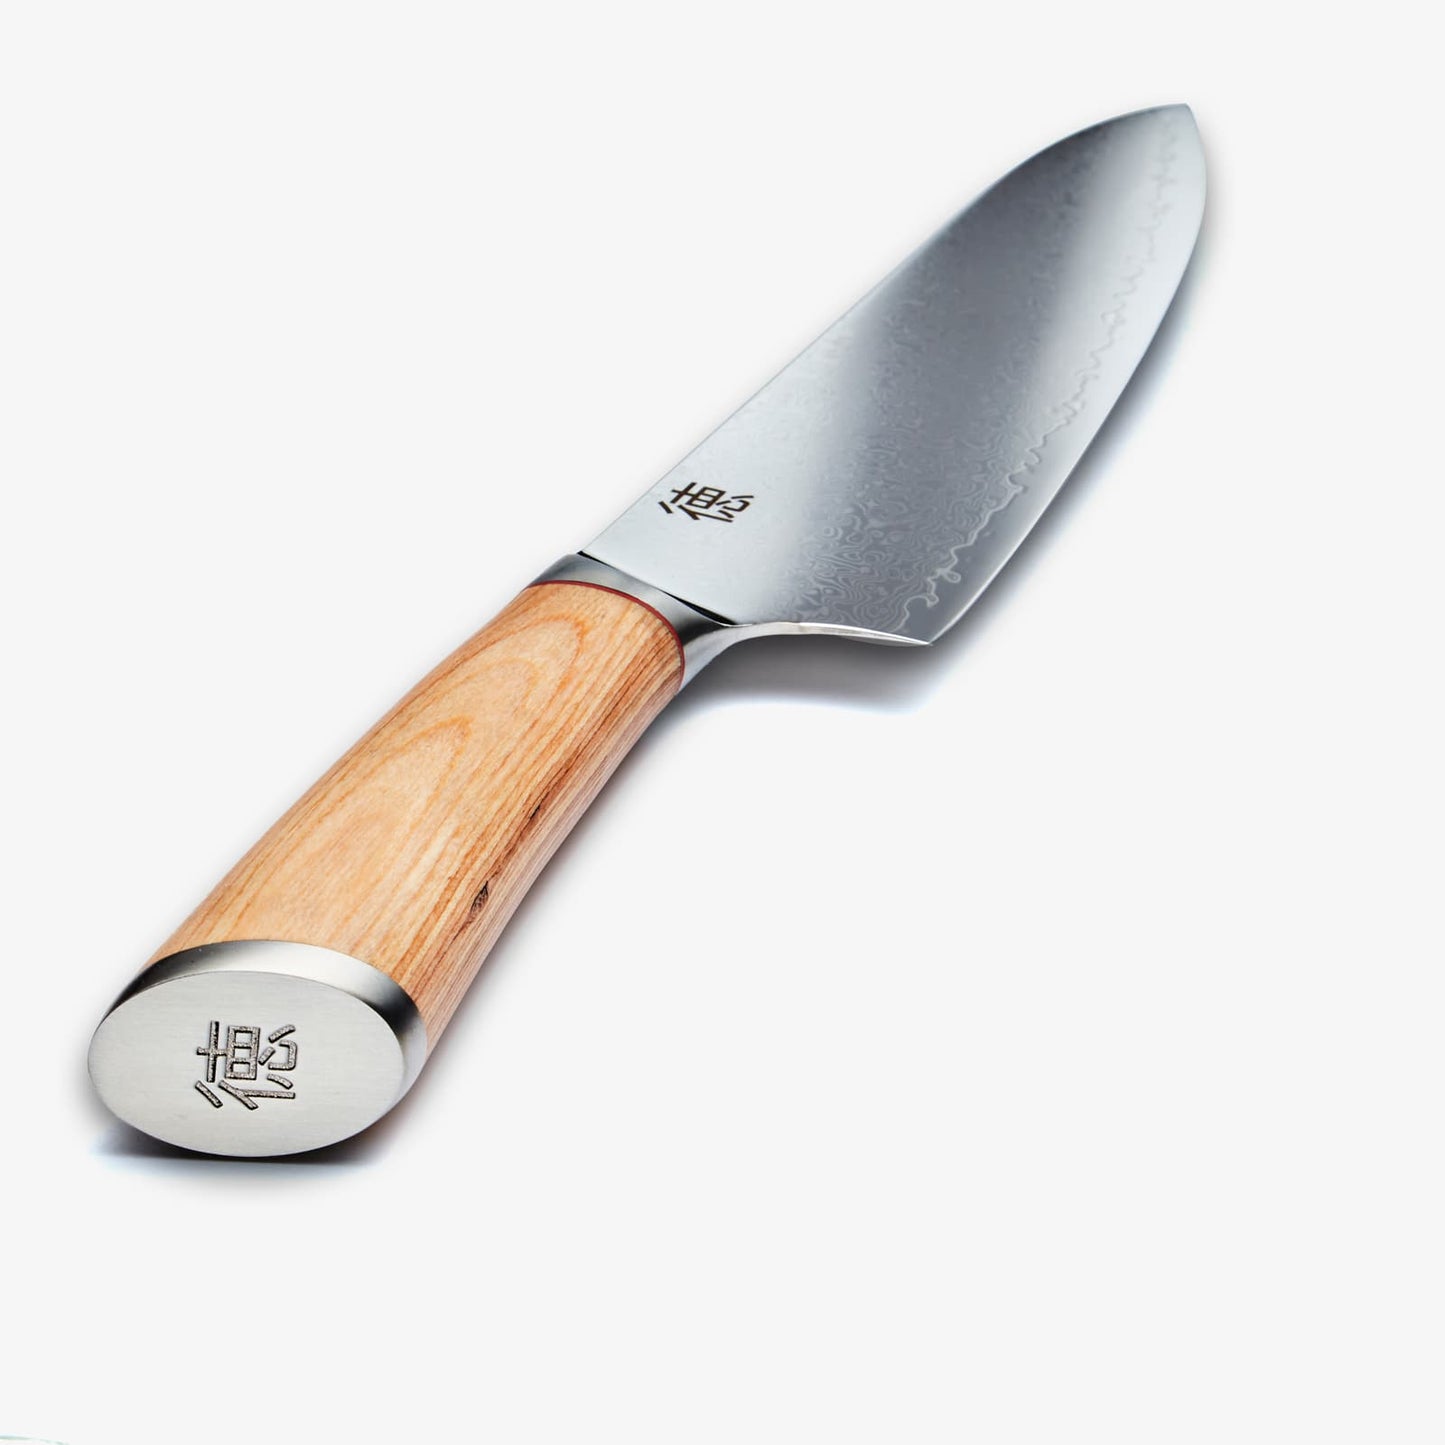 Харута (はる た) 8 -дюймовый нож Gyuto